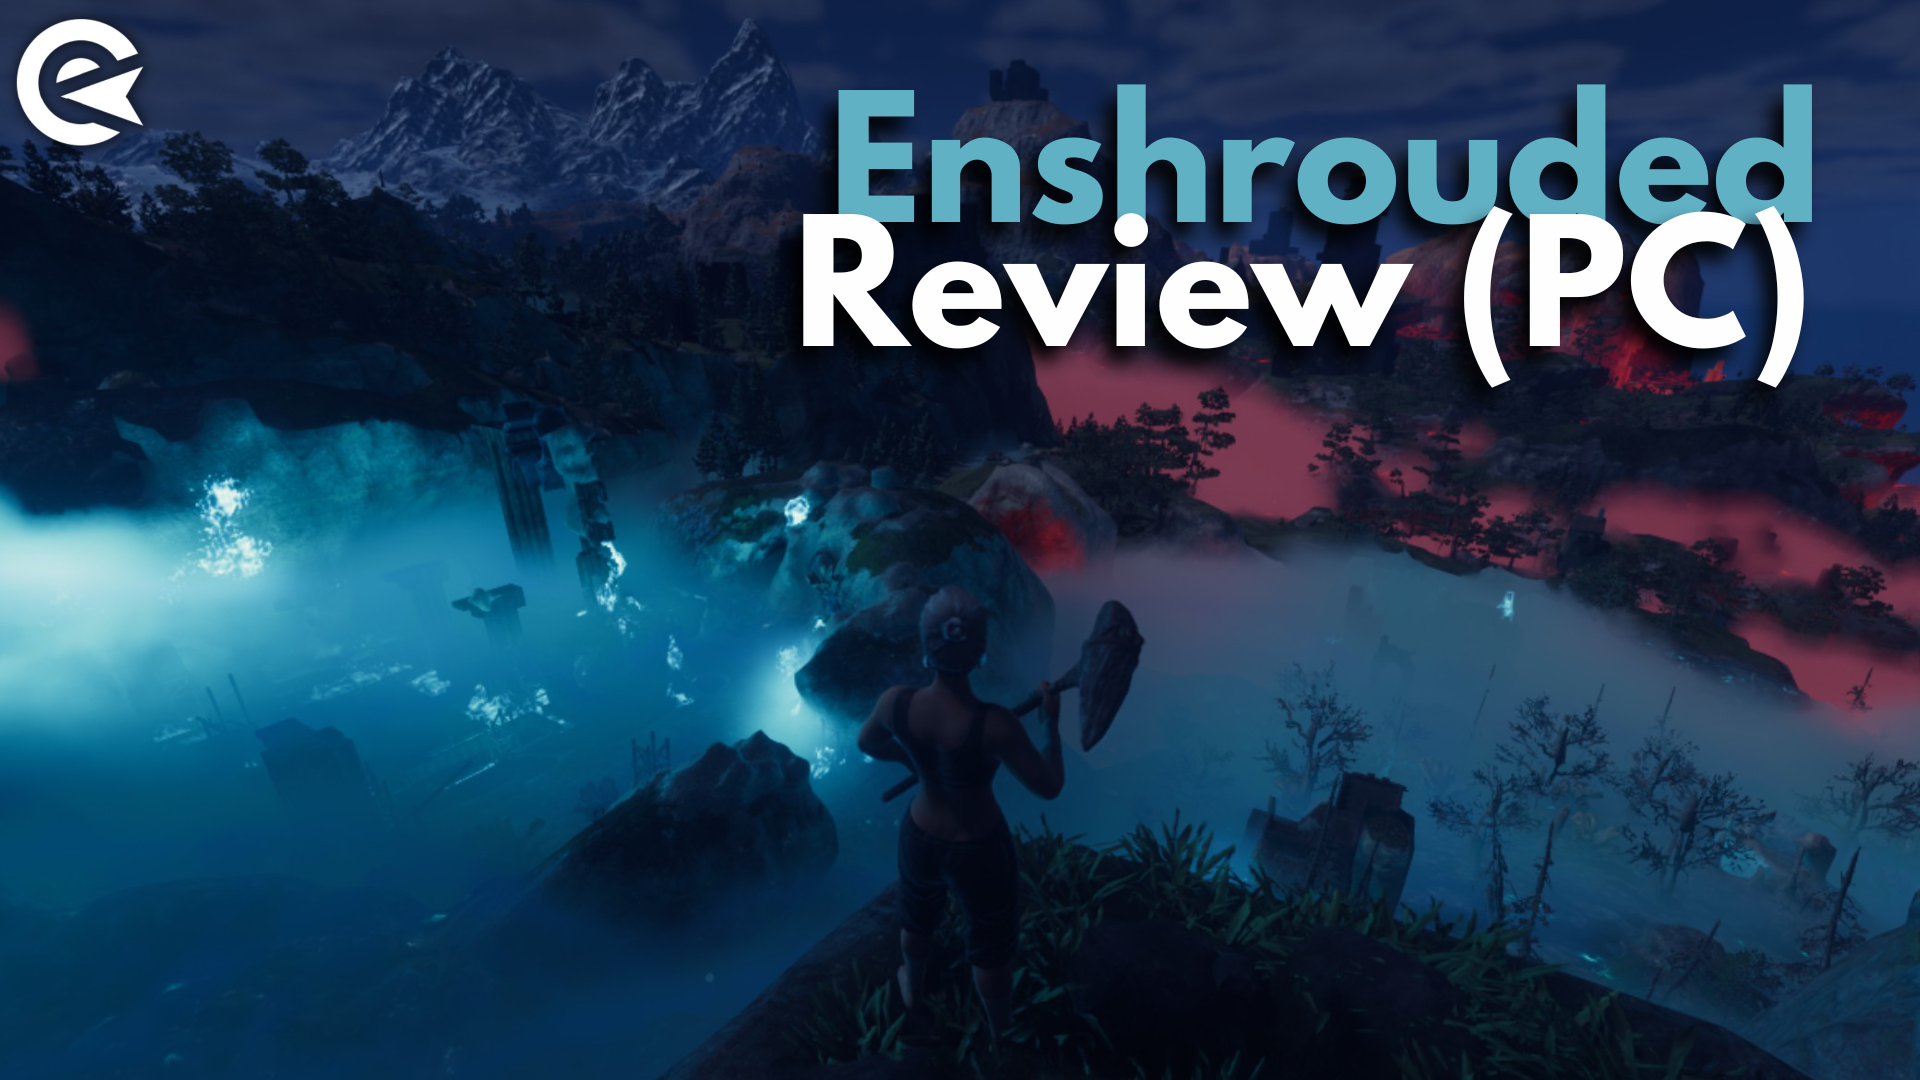 Enshrouded Review PC